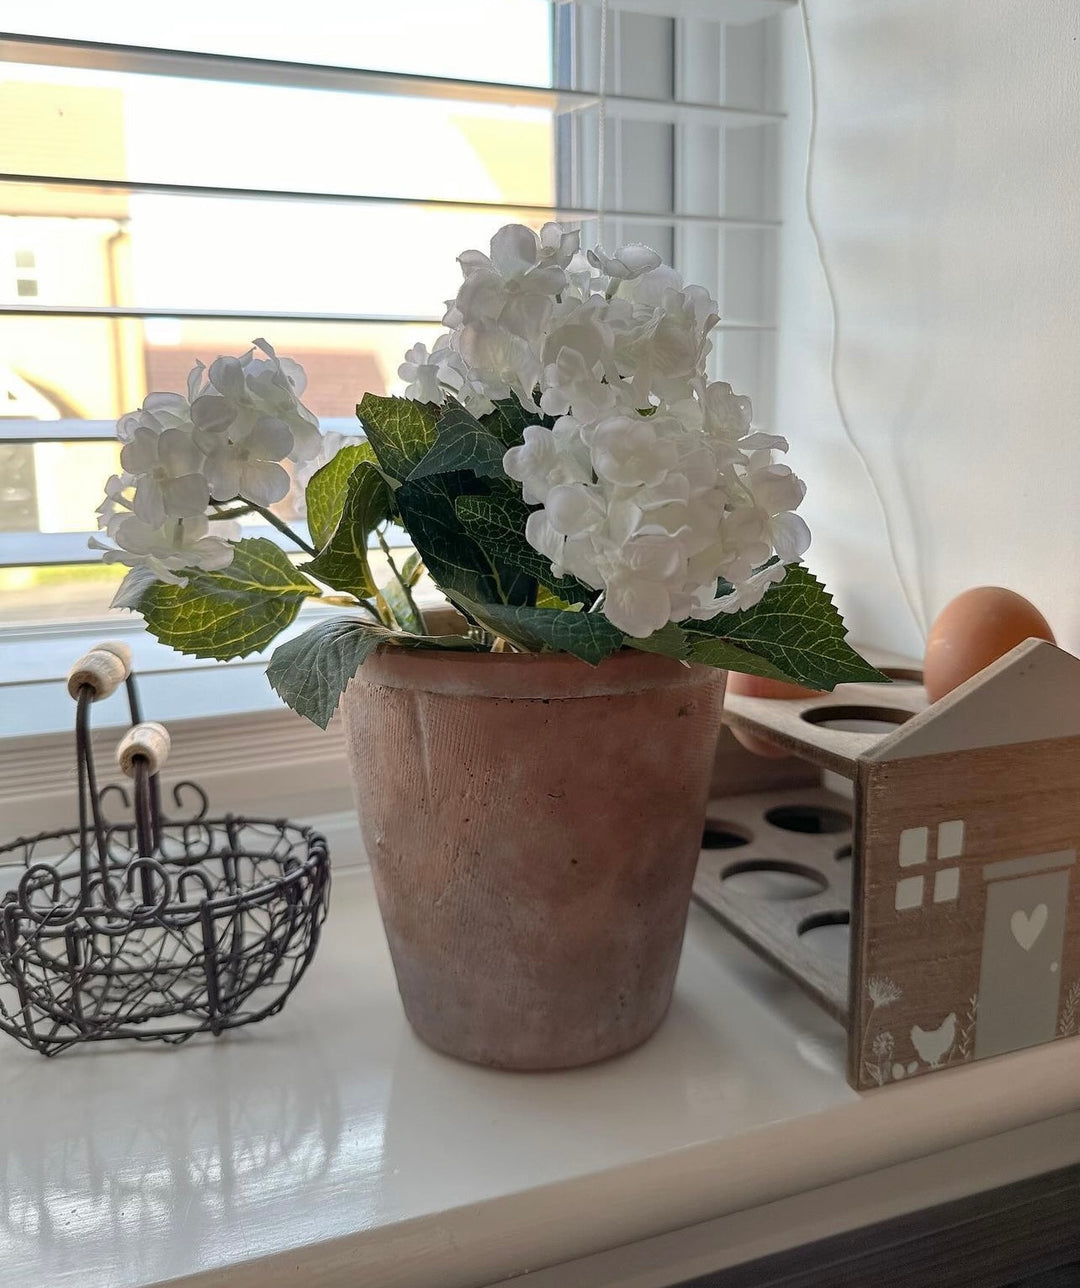 White Hydrangea Bush with Rustic Ceramic Flowerpot